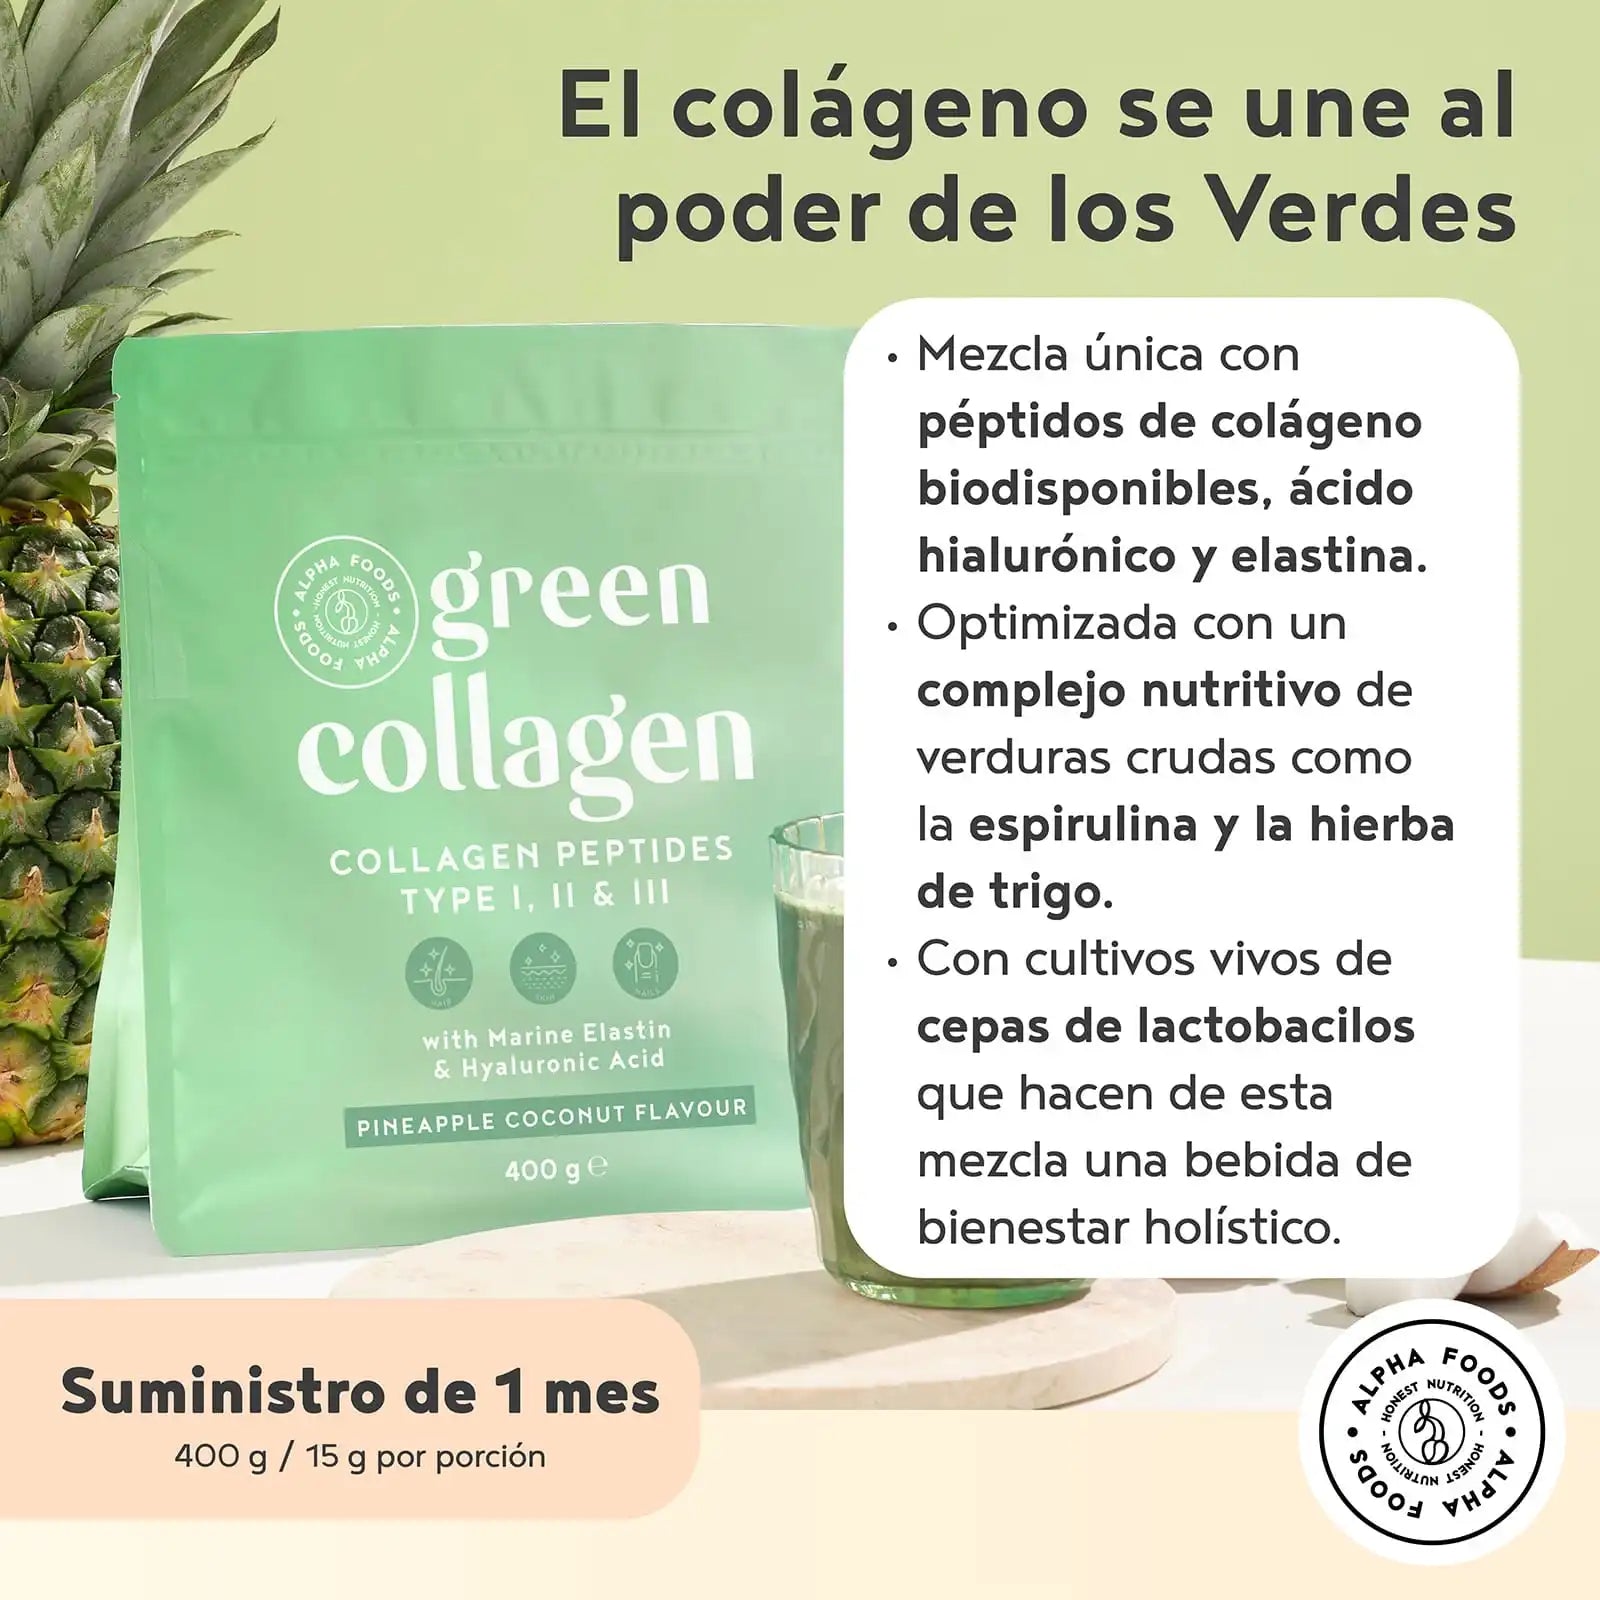 A+ One - Green Collagen